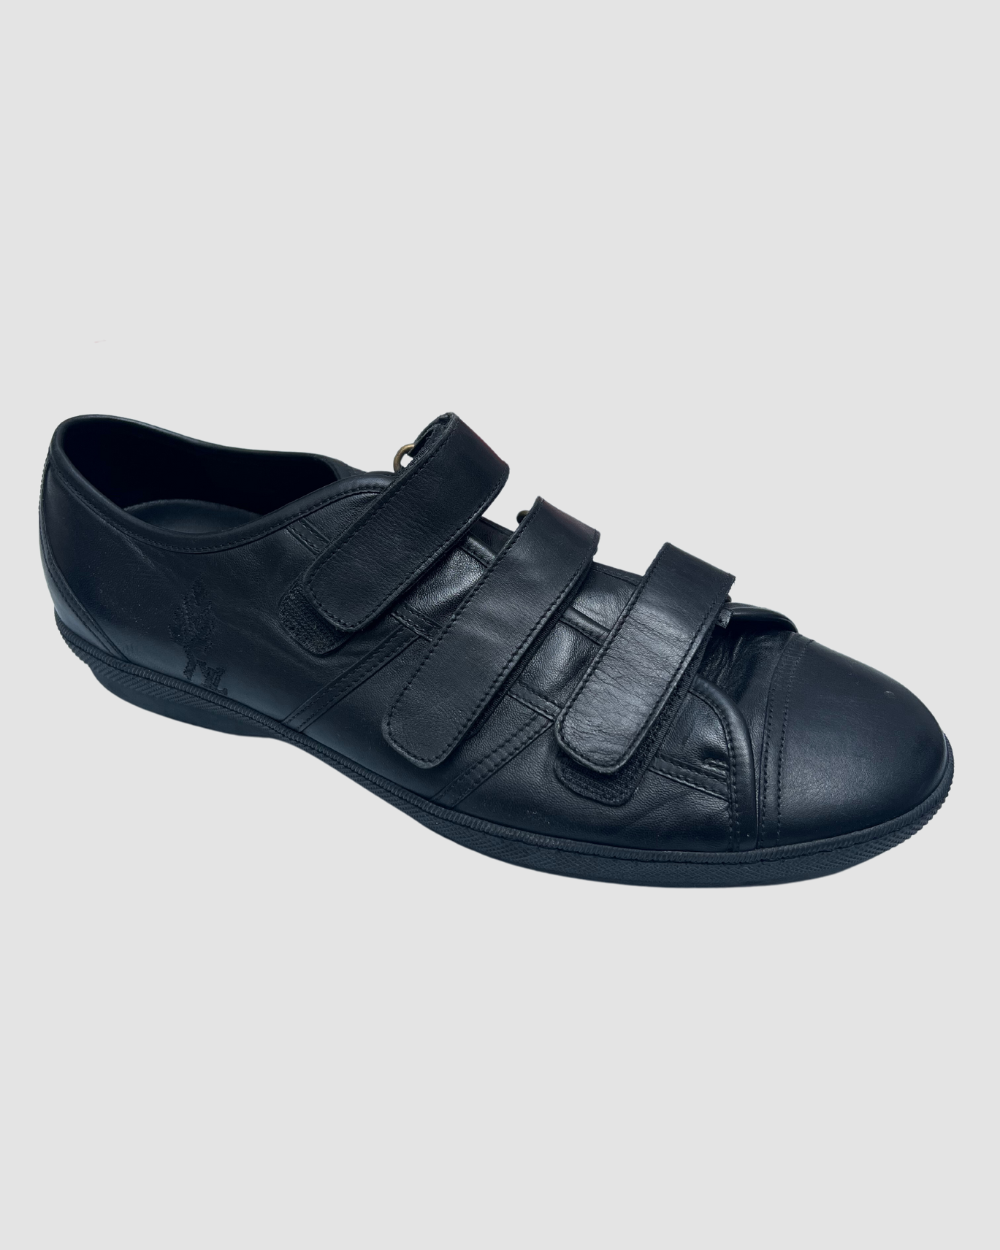 Louis Vuitton Air Jordan 13 Black Brown LV Shoes, Sneakers - Ecomhao Store